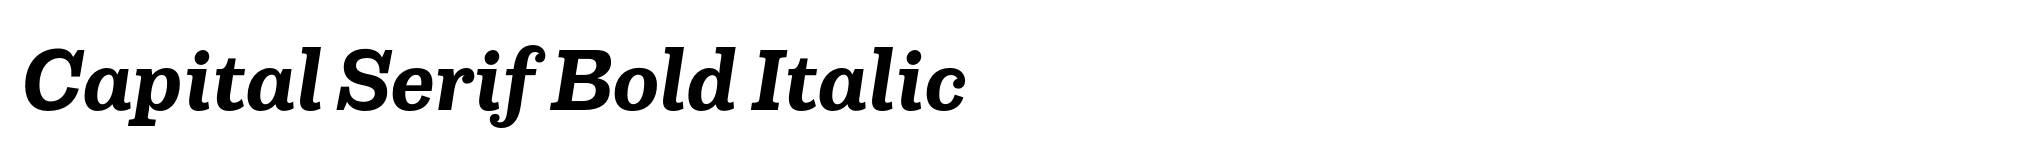 Capital Serif Bold Italic image